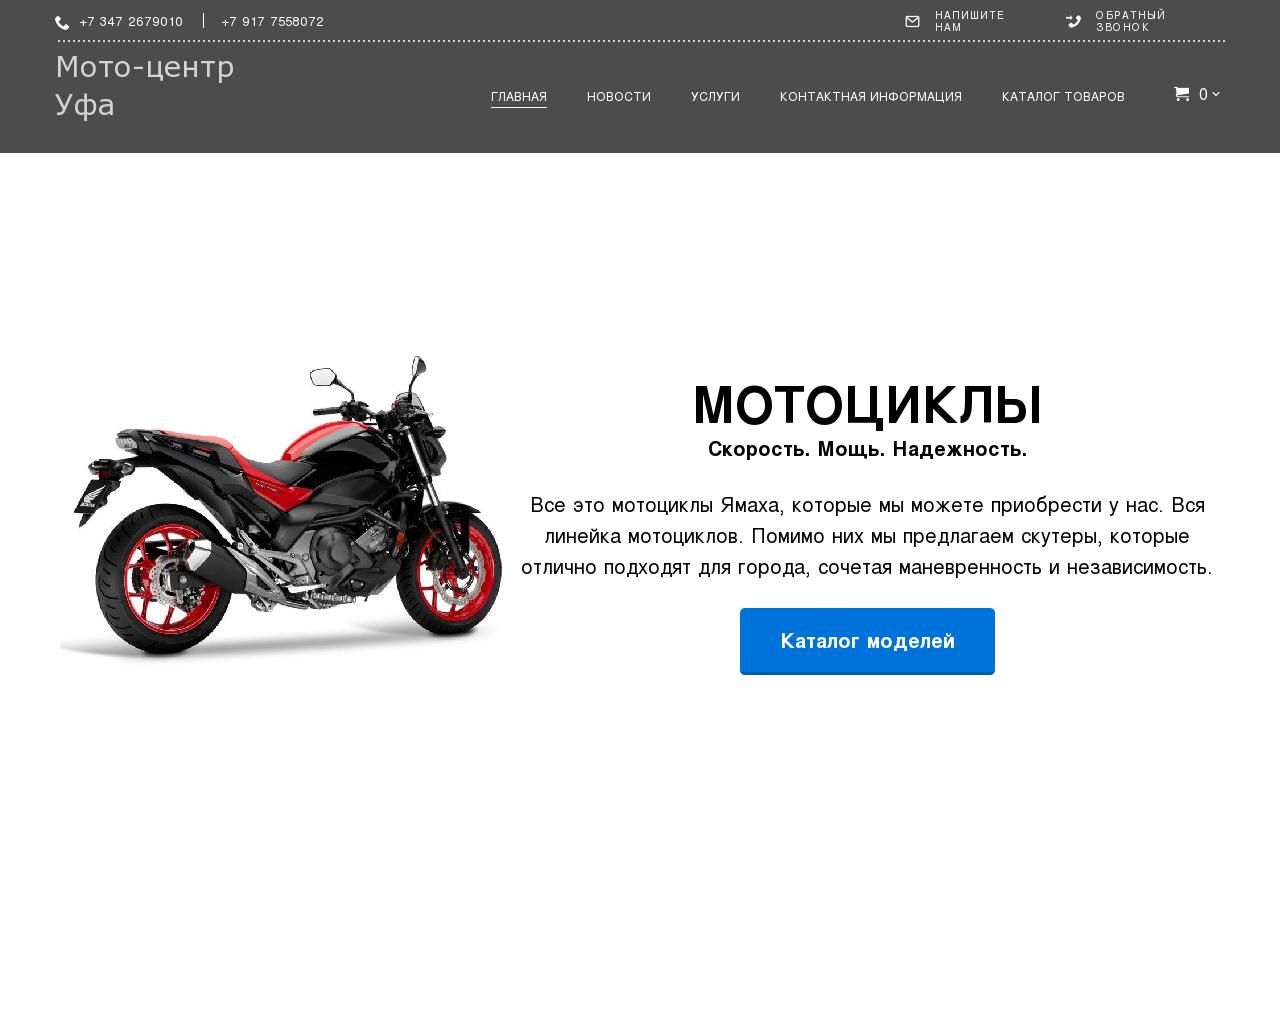 Изображение сайта moto-ufa.ru в разрешении 1280x1024